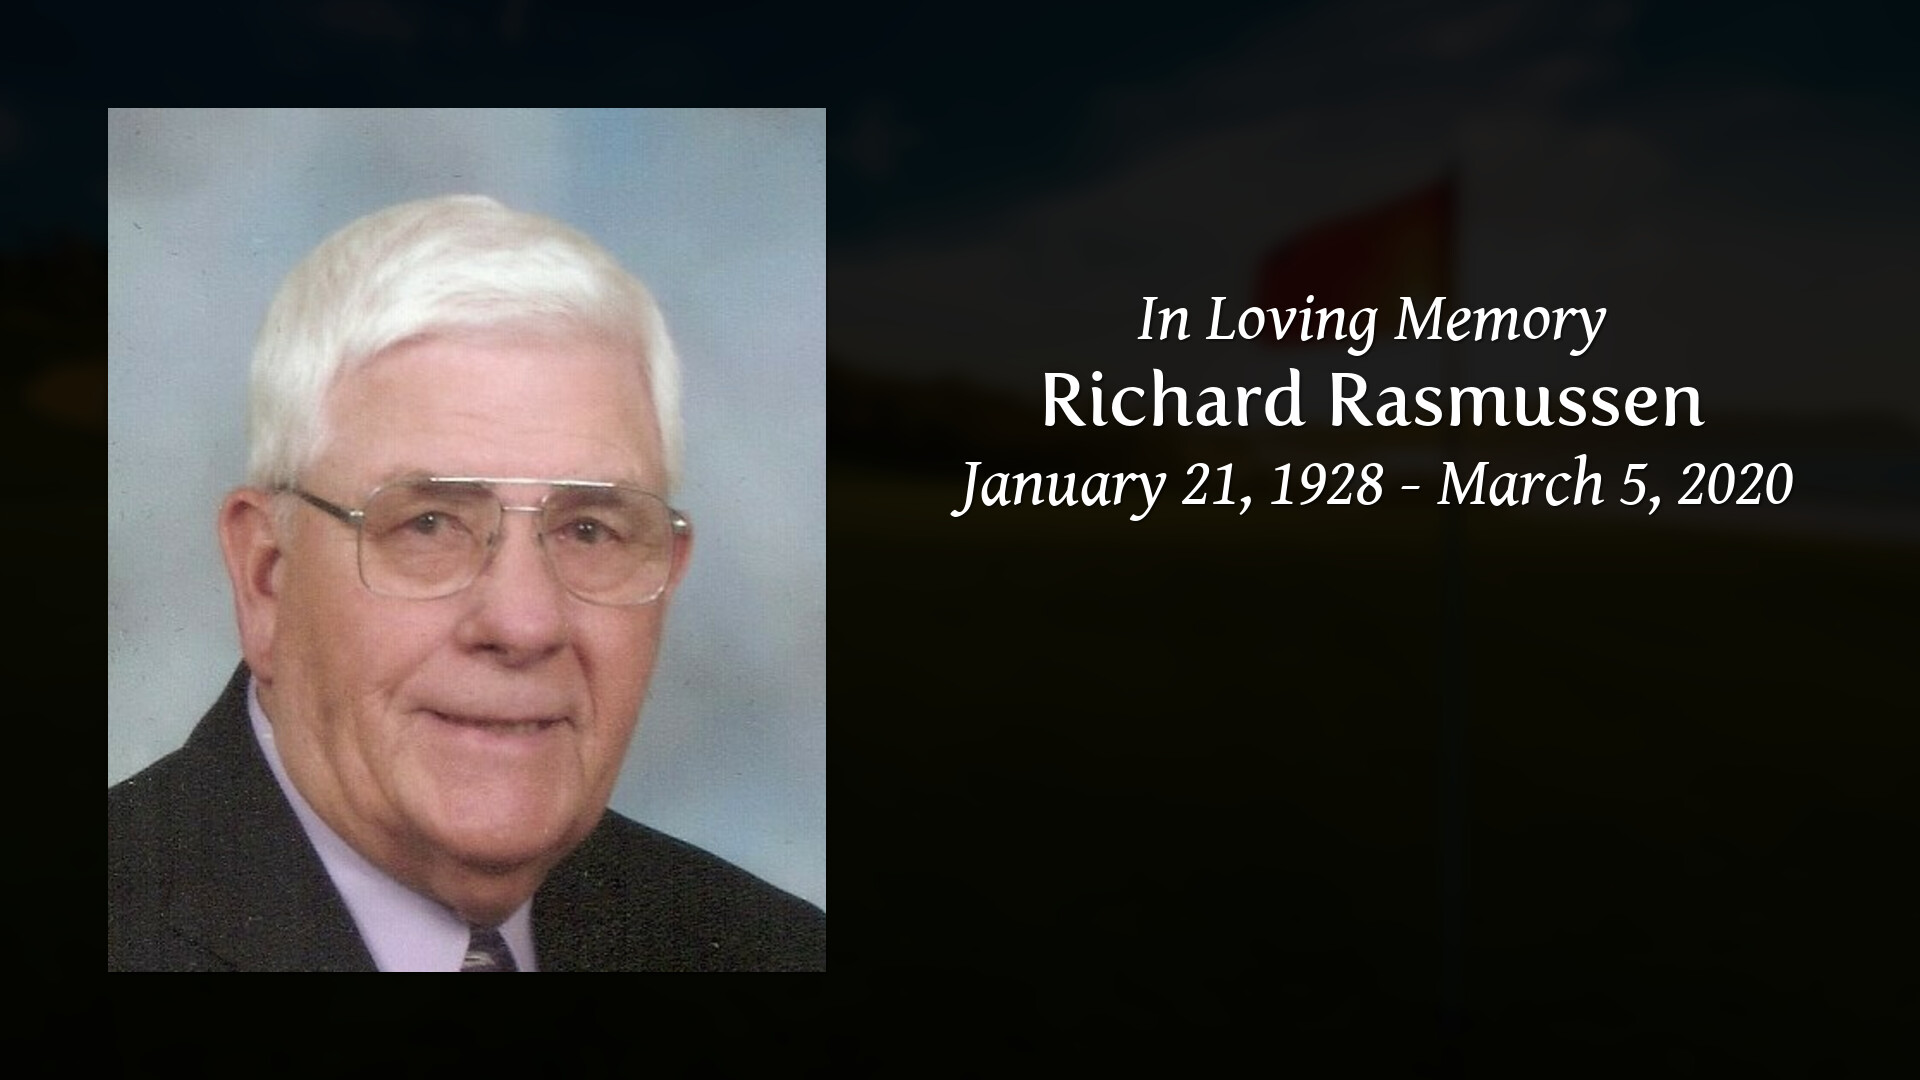 Richard Rasmussen Tribute Video